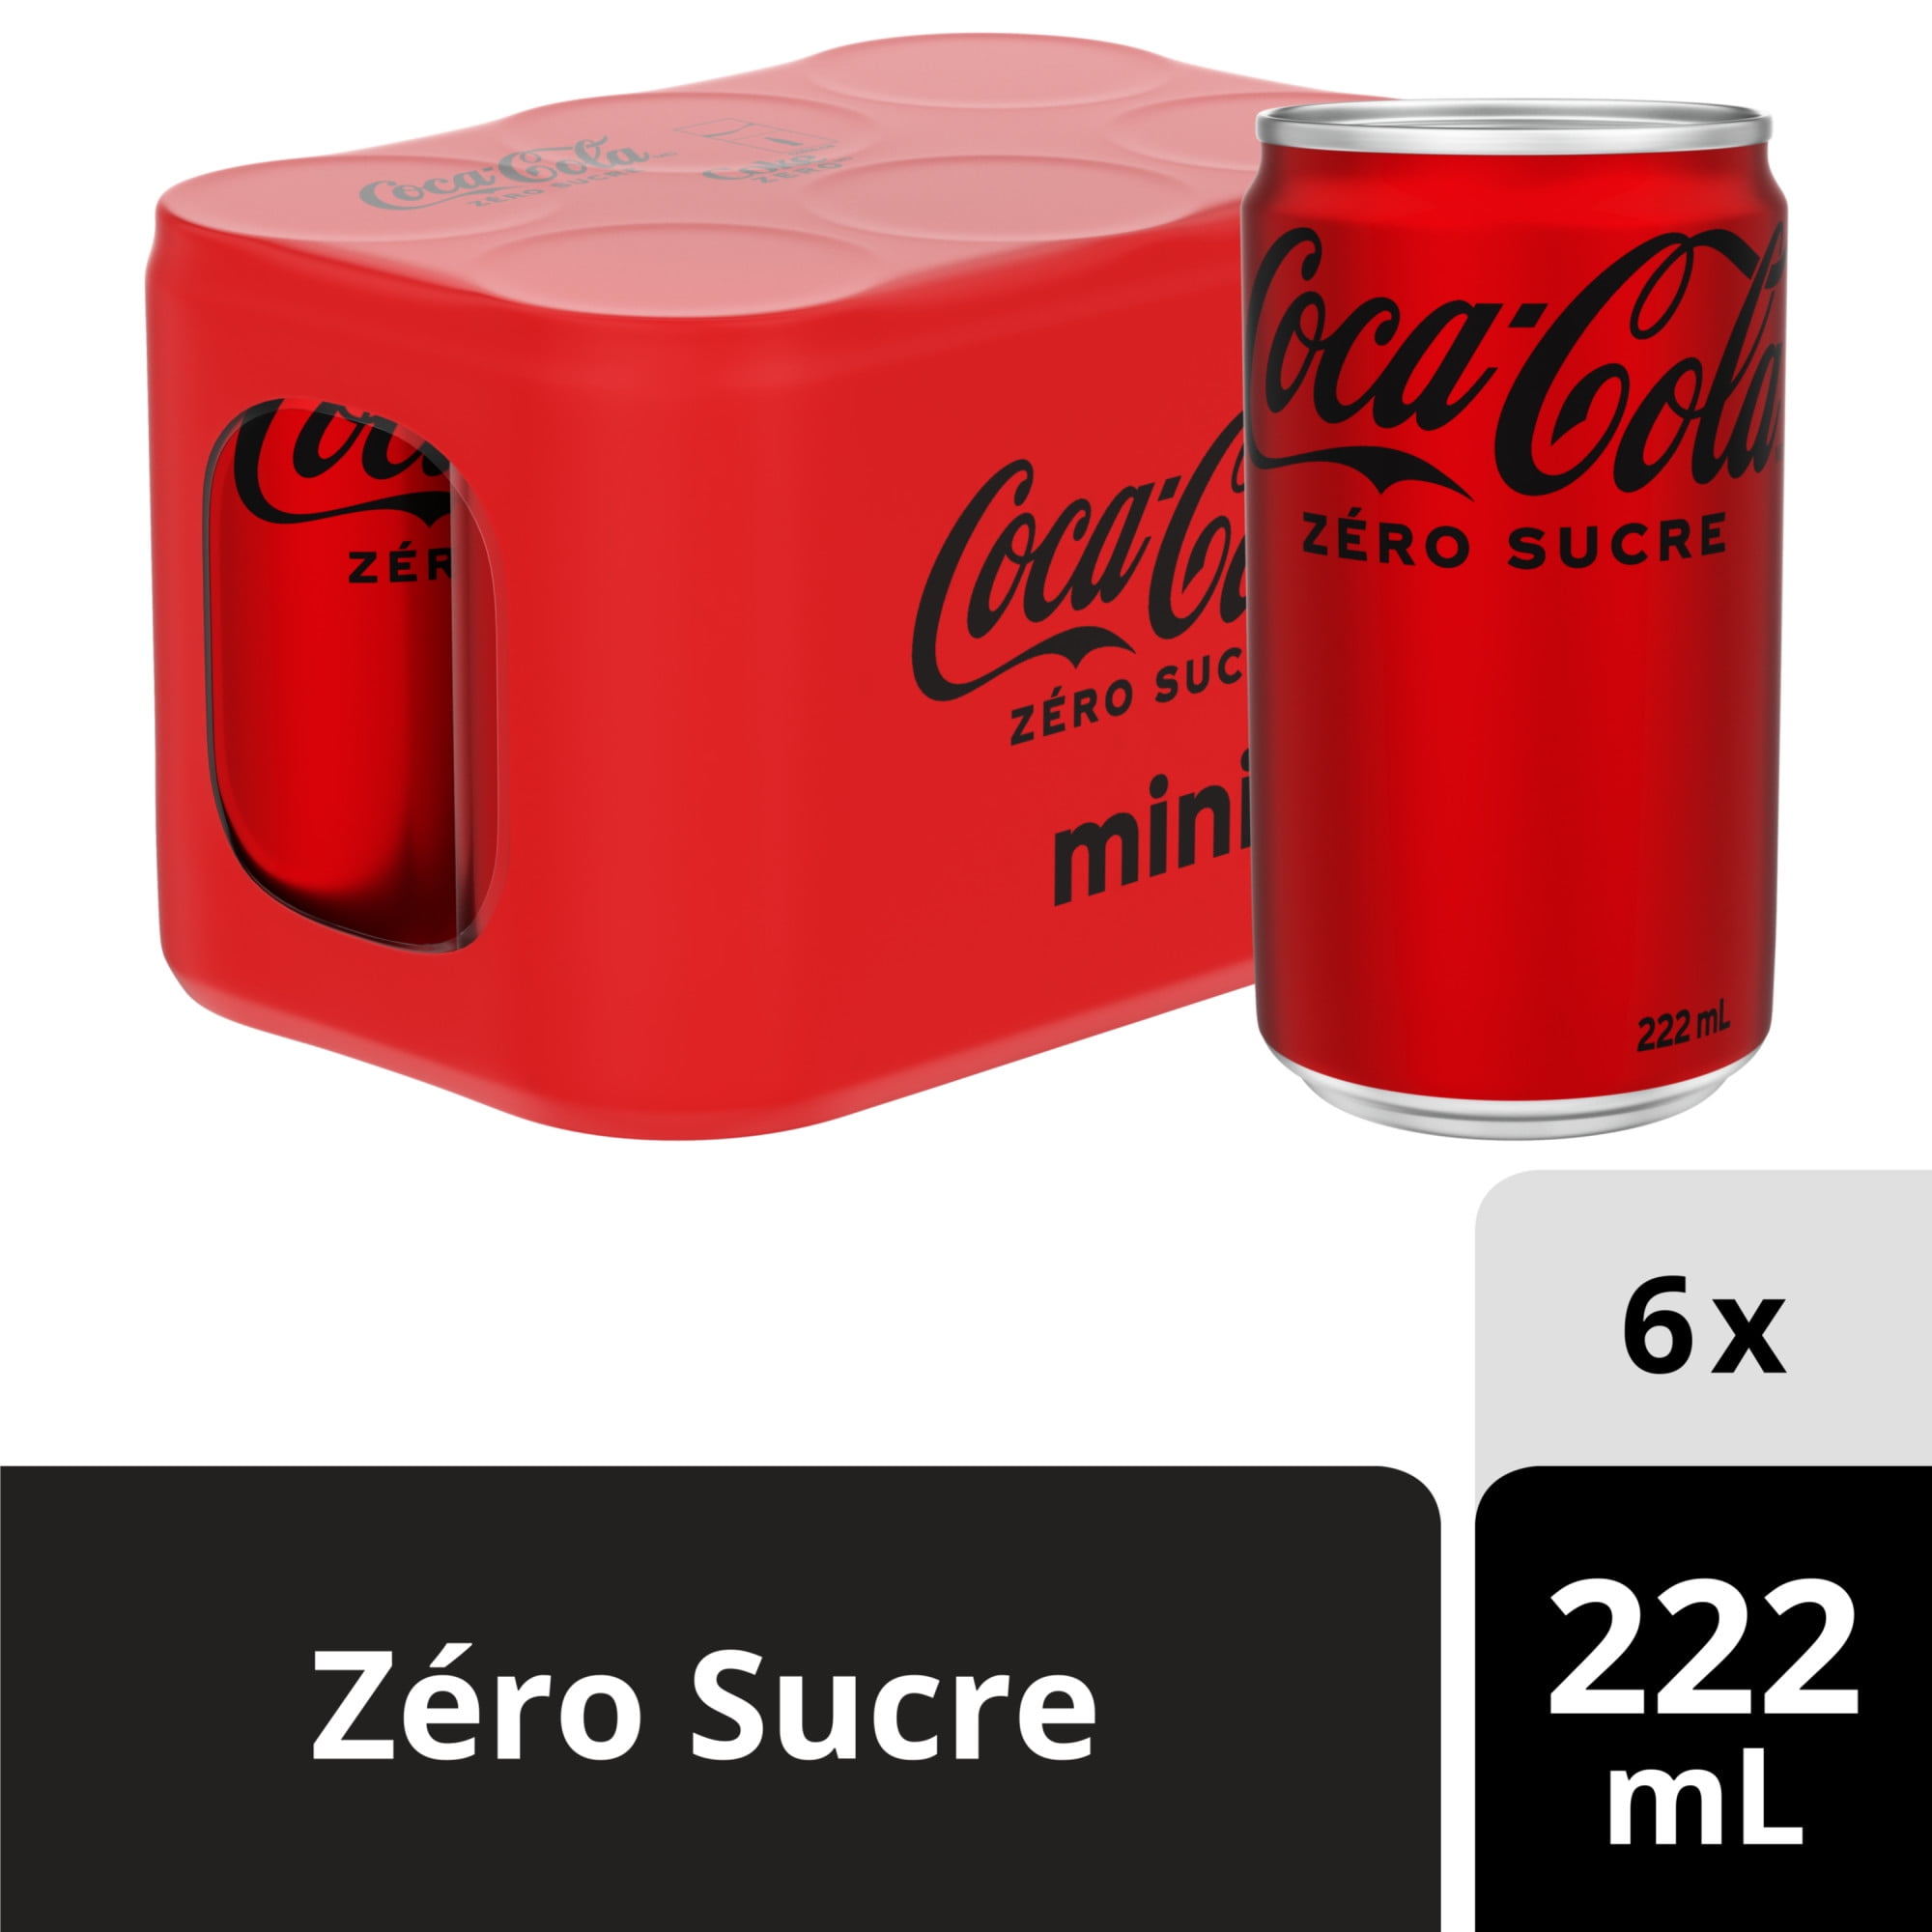 Coca Cola Zero Sugar mL Mini Cans, 6 Pack, 6 x  mL   Walmart.ca